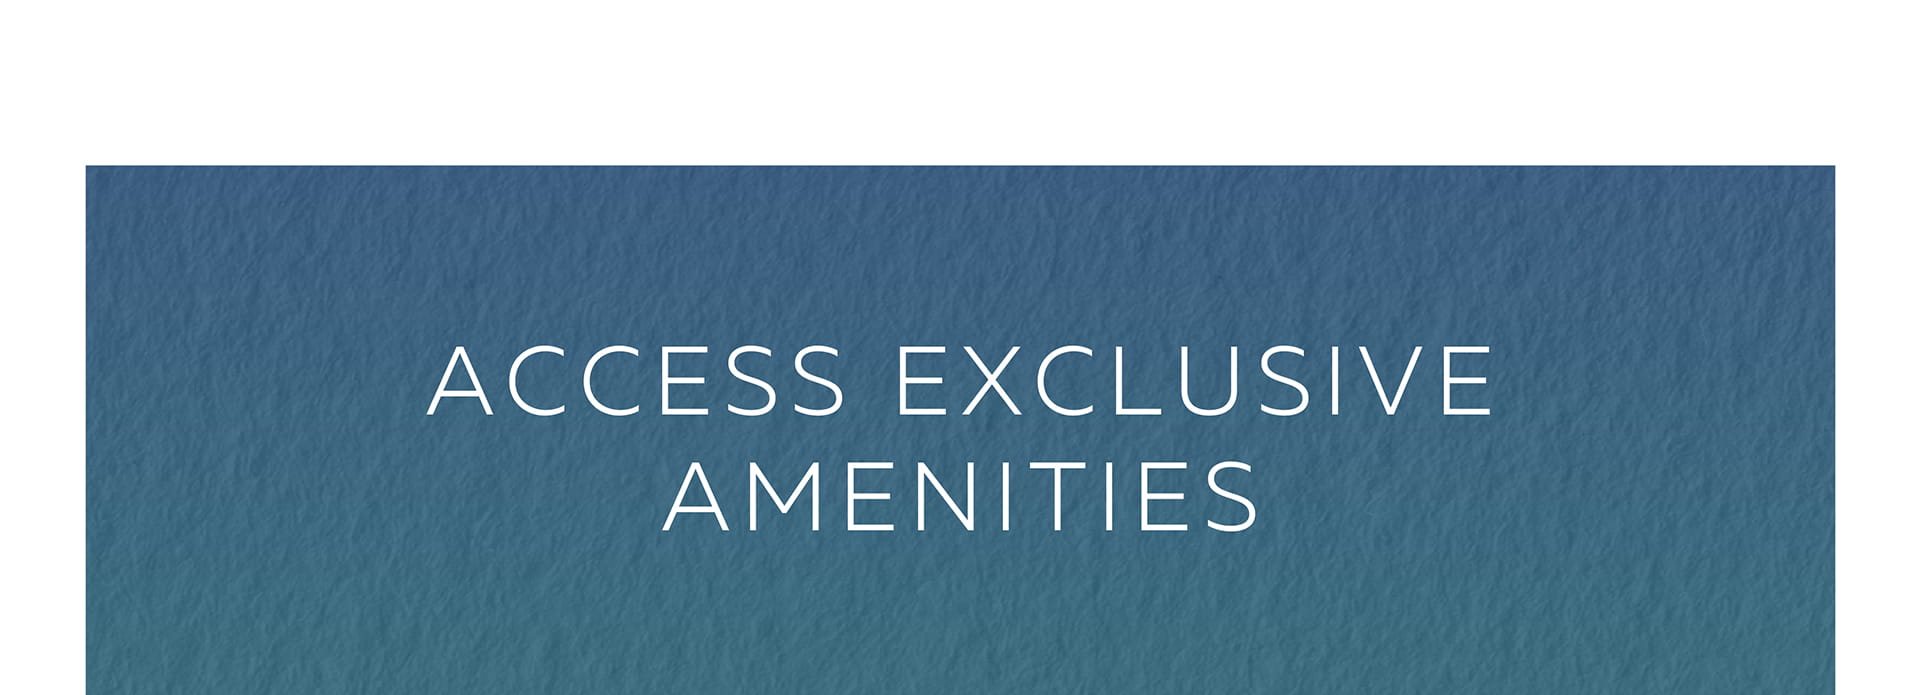 Access exclusive amenities